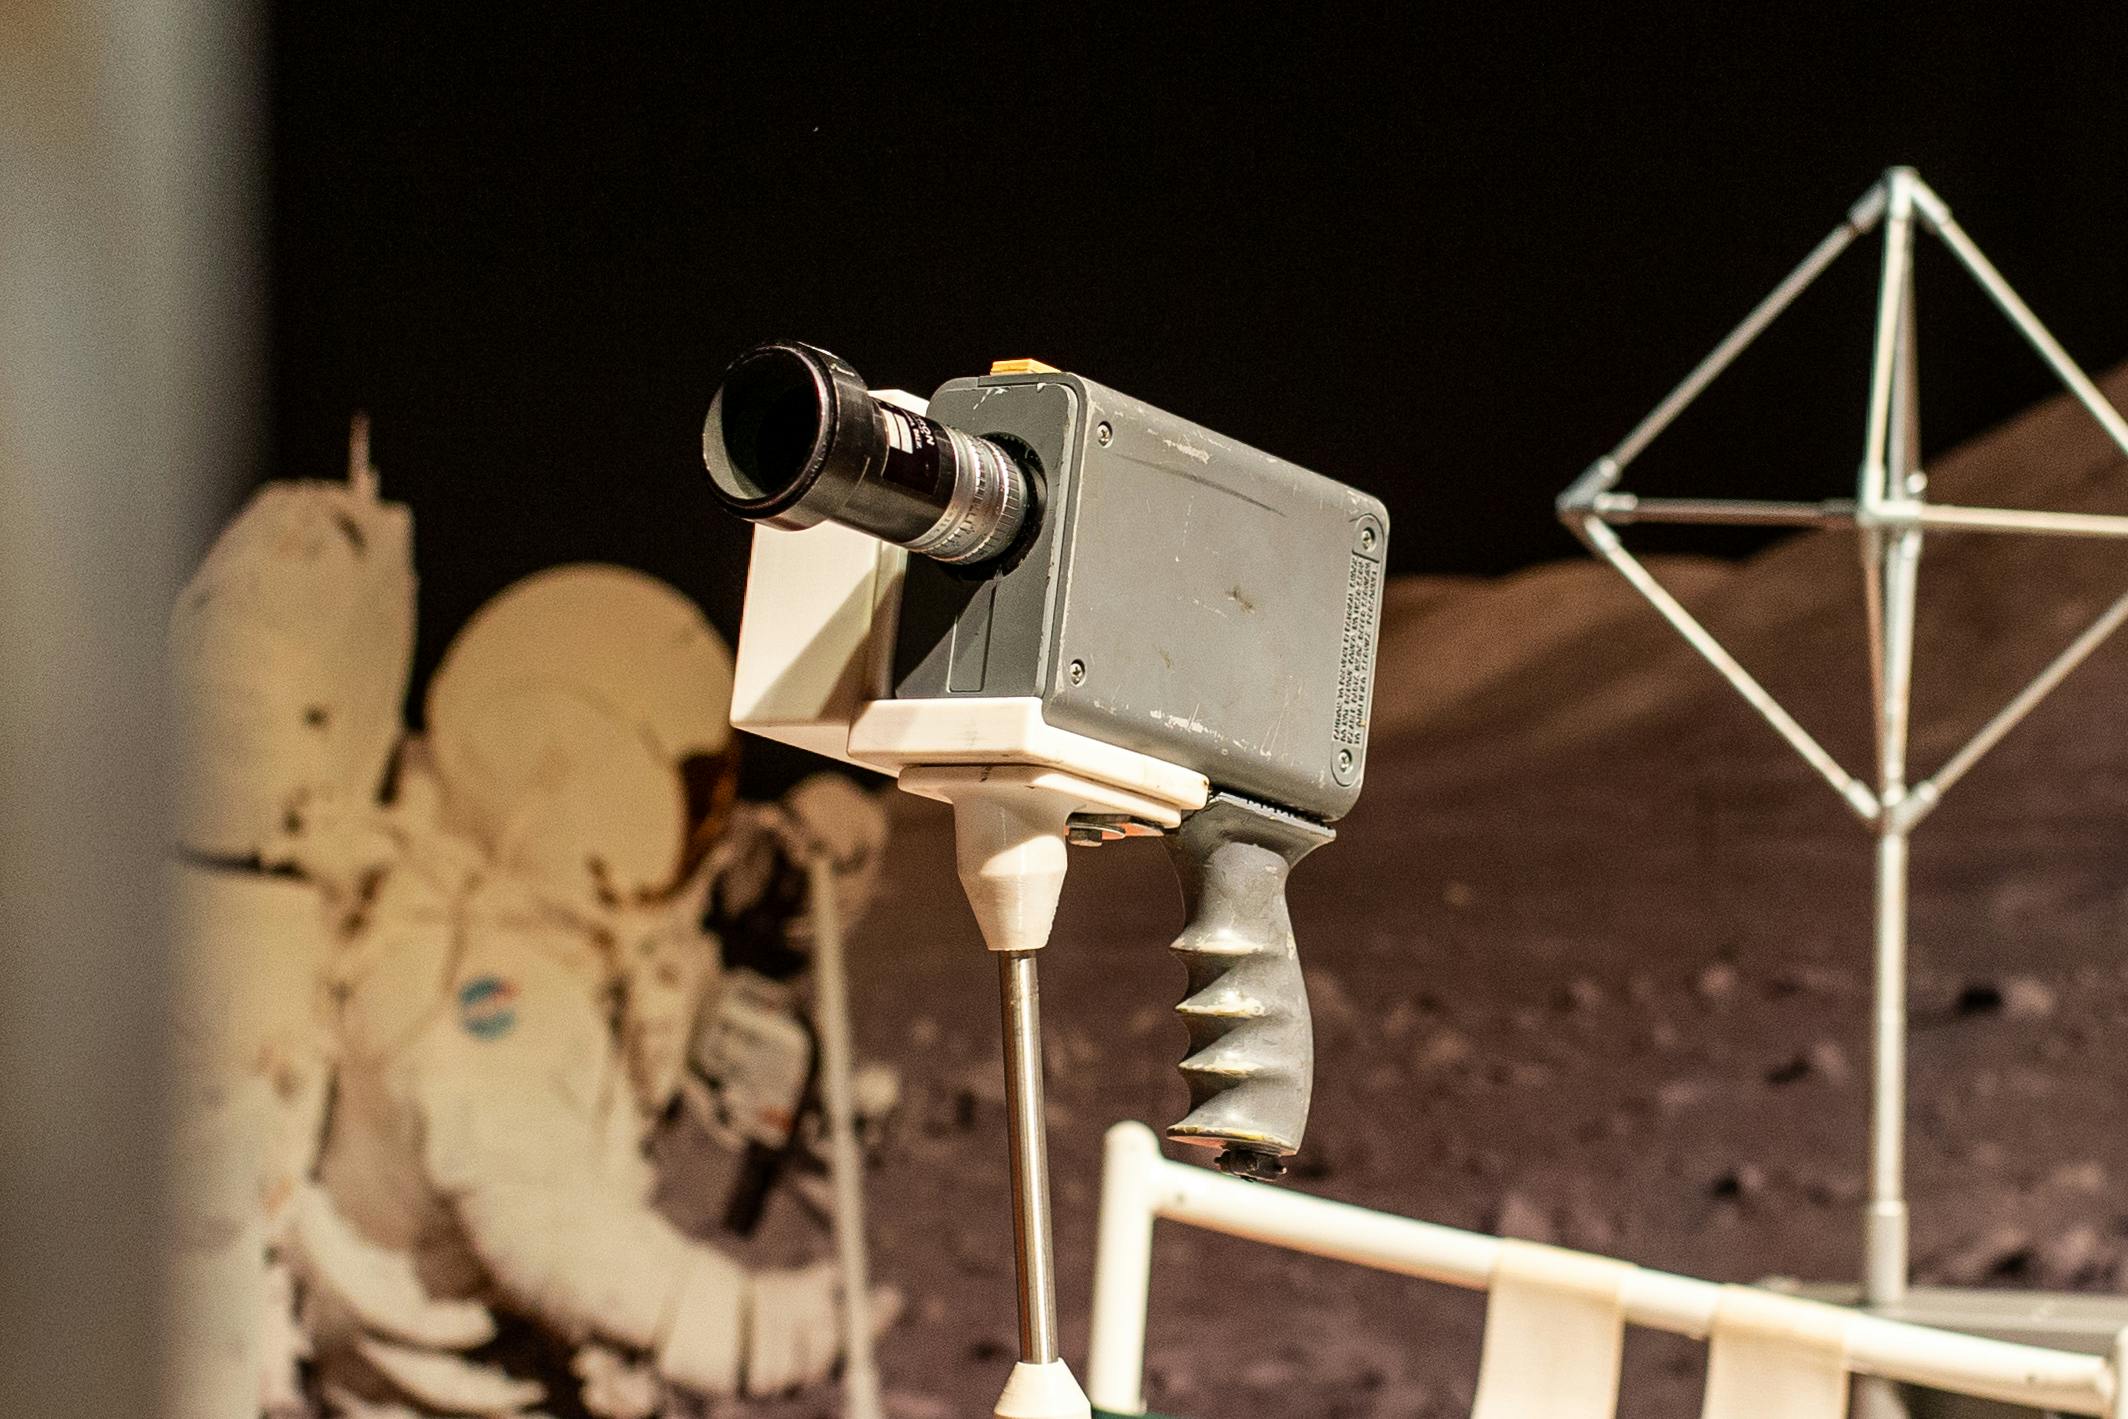 Lunar Rover ray gun blaster camera